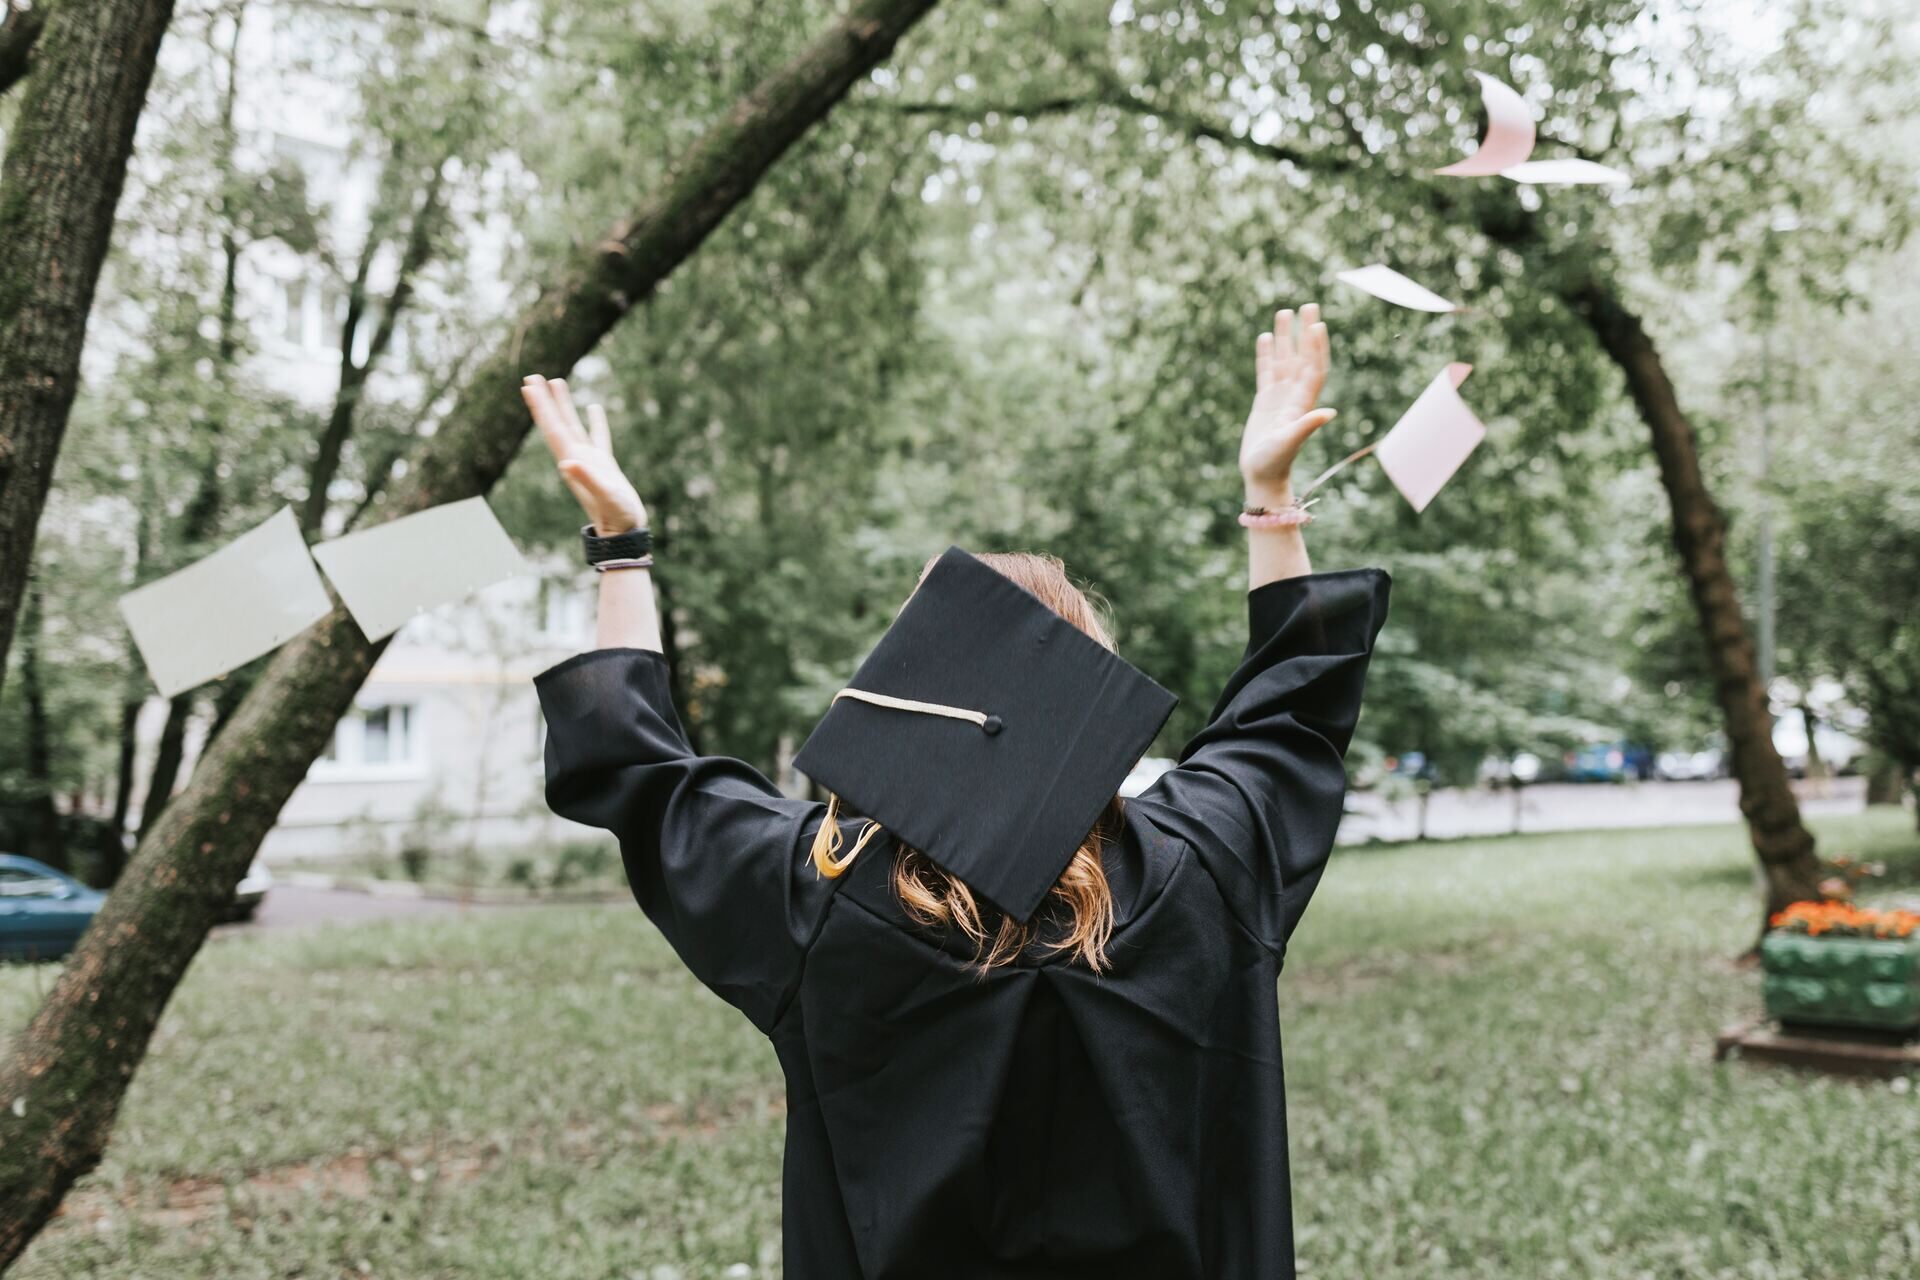 Difficulties of studies: graduating involves liberating gestures